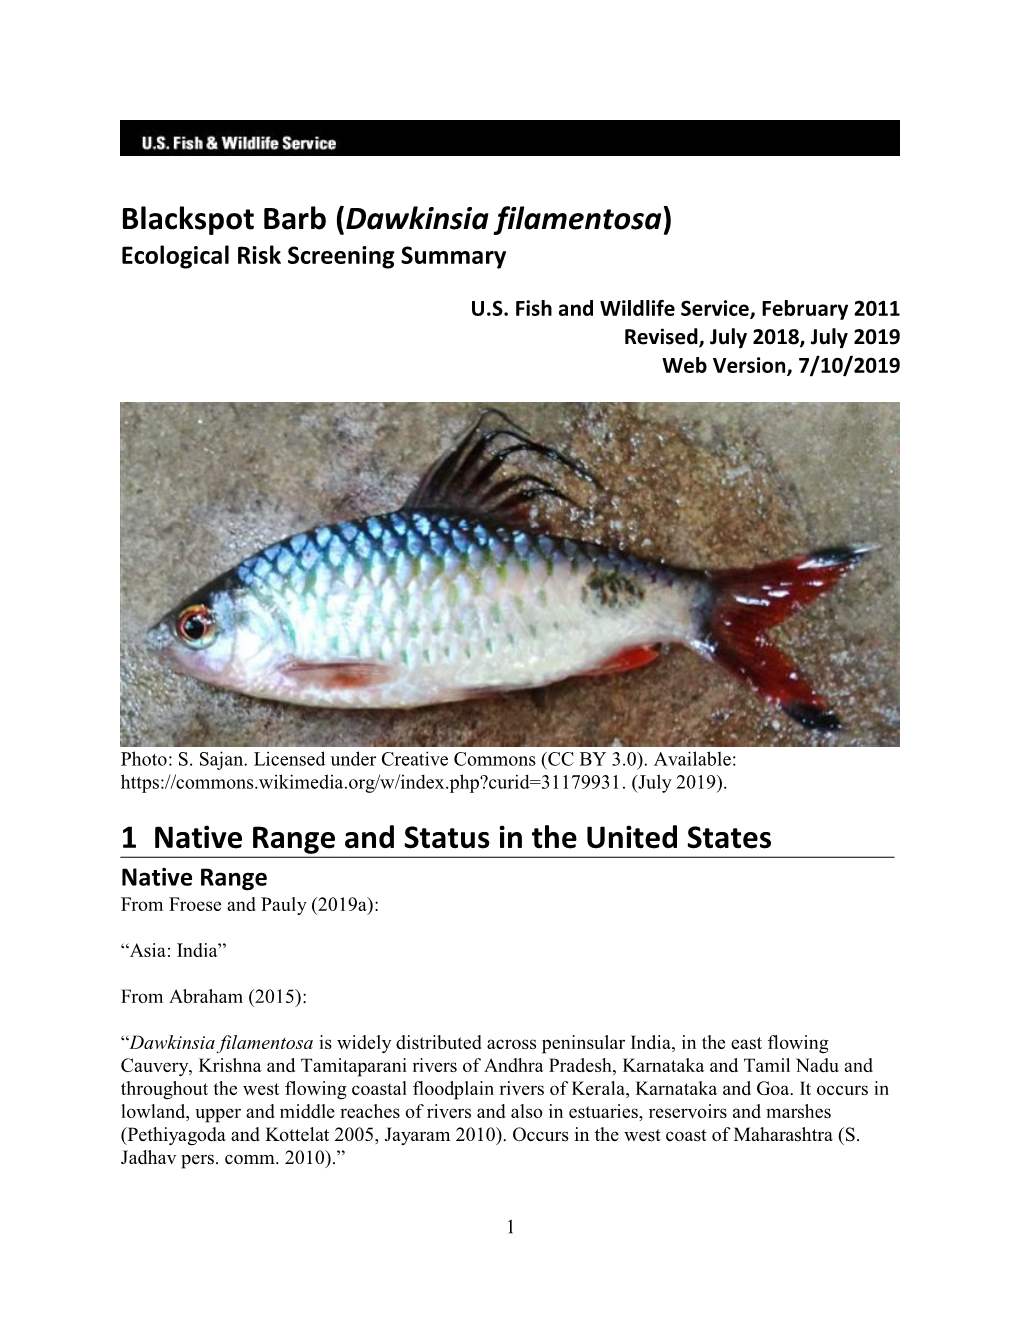 Puntius Filamentosus (Blackspot Barb) Ecological Risk Screening Summary